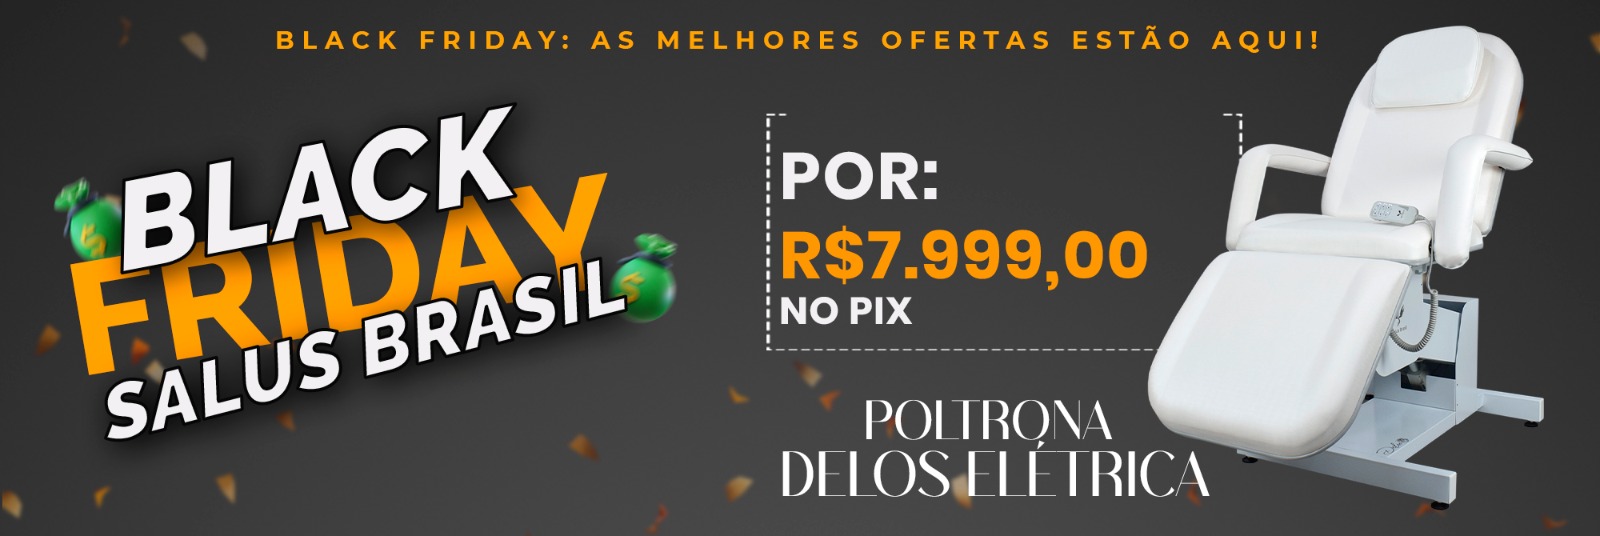 (c) Salusbrasil.com.br